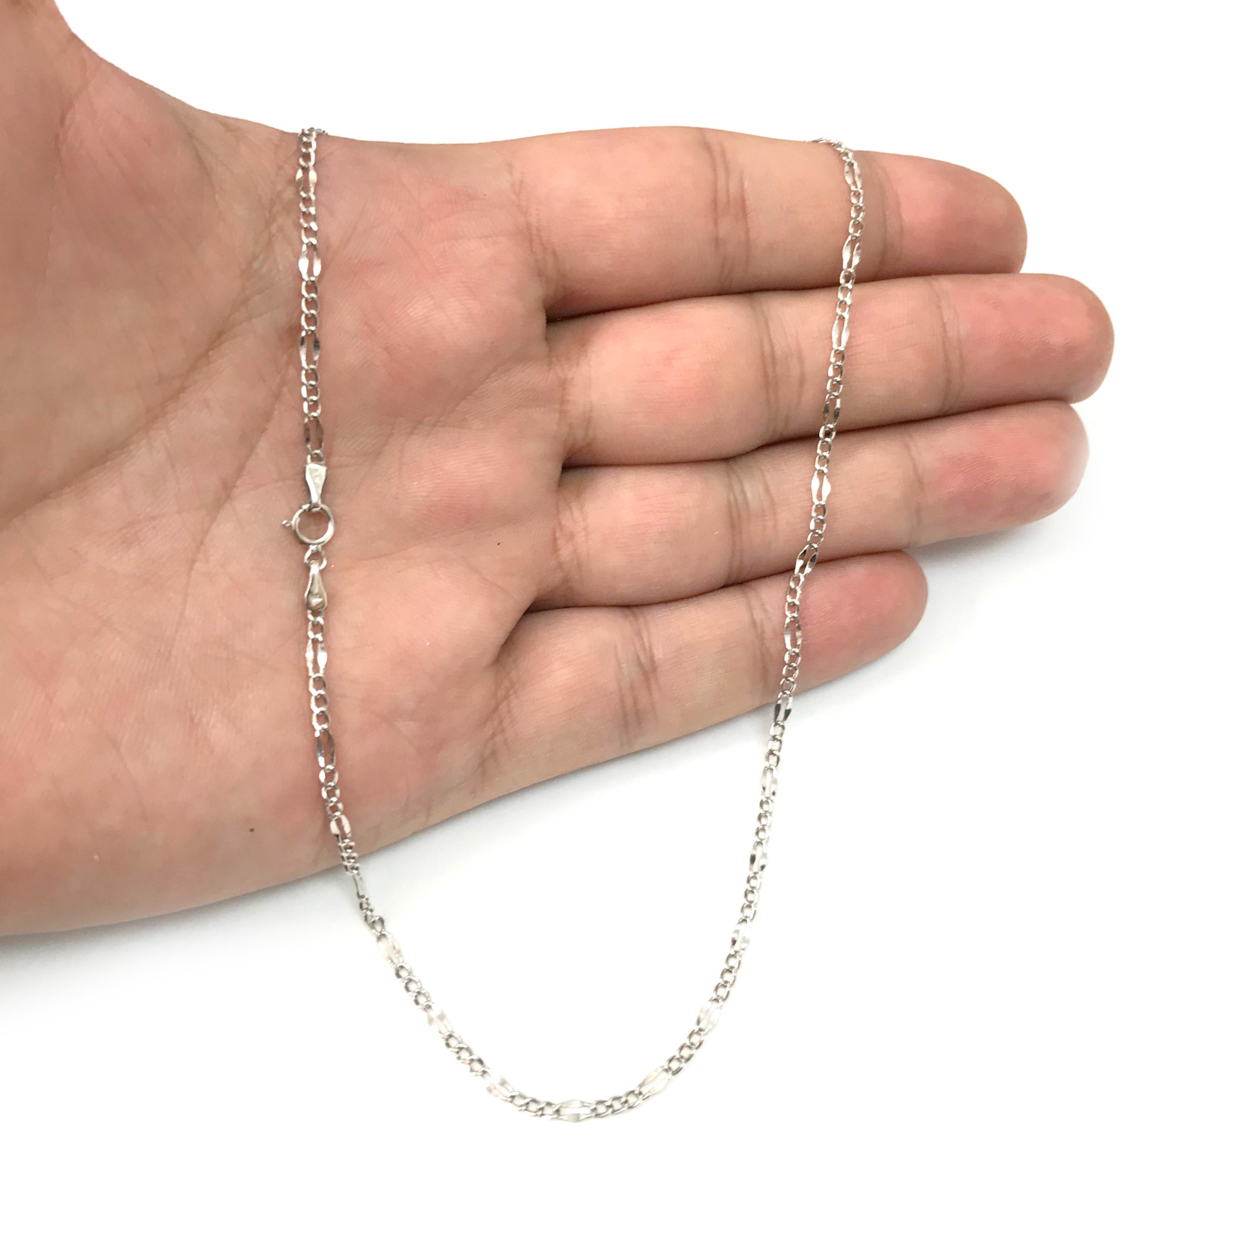 JewelryAffairs 10K White Gold Flat Oval Figaro Chain Necklace,2.0mm, 18"